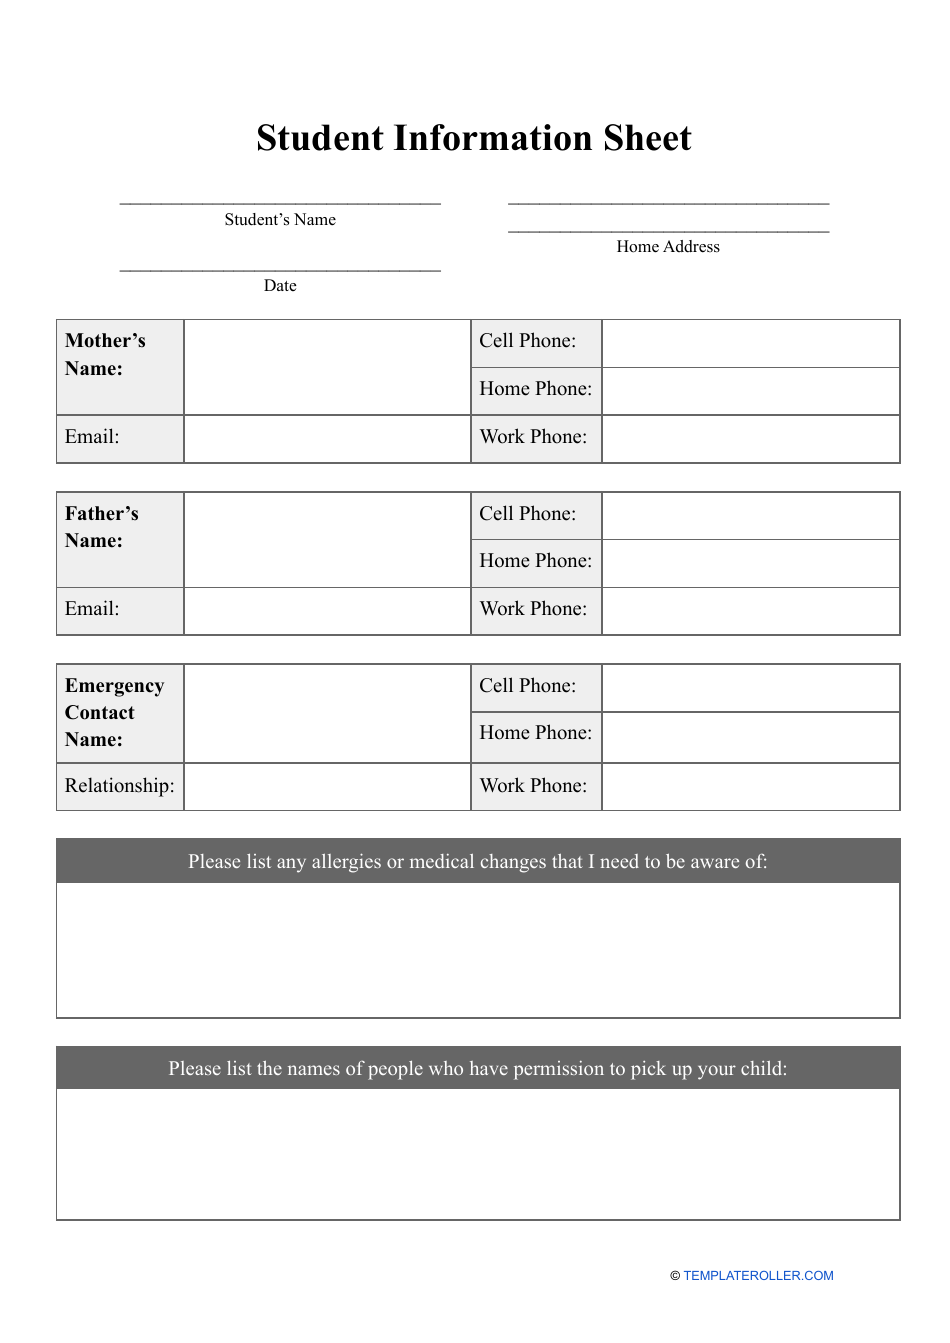 Sample Student Information Sheet Document